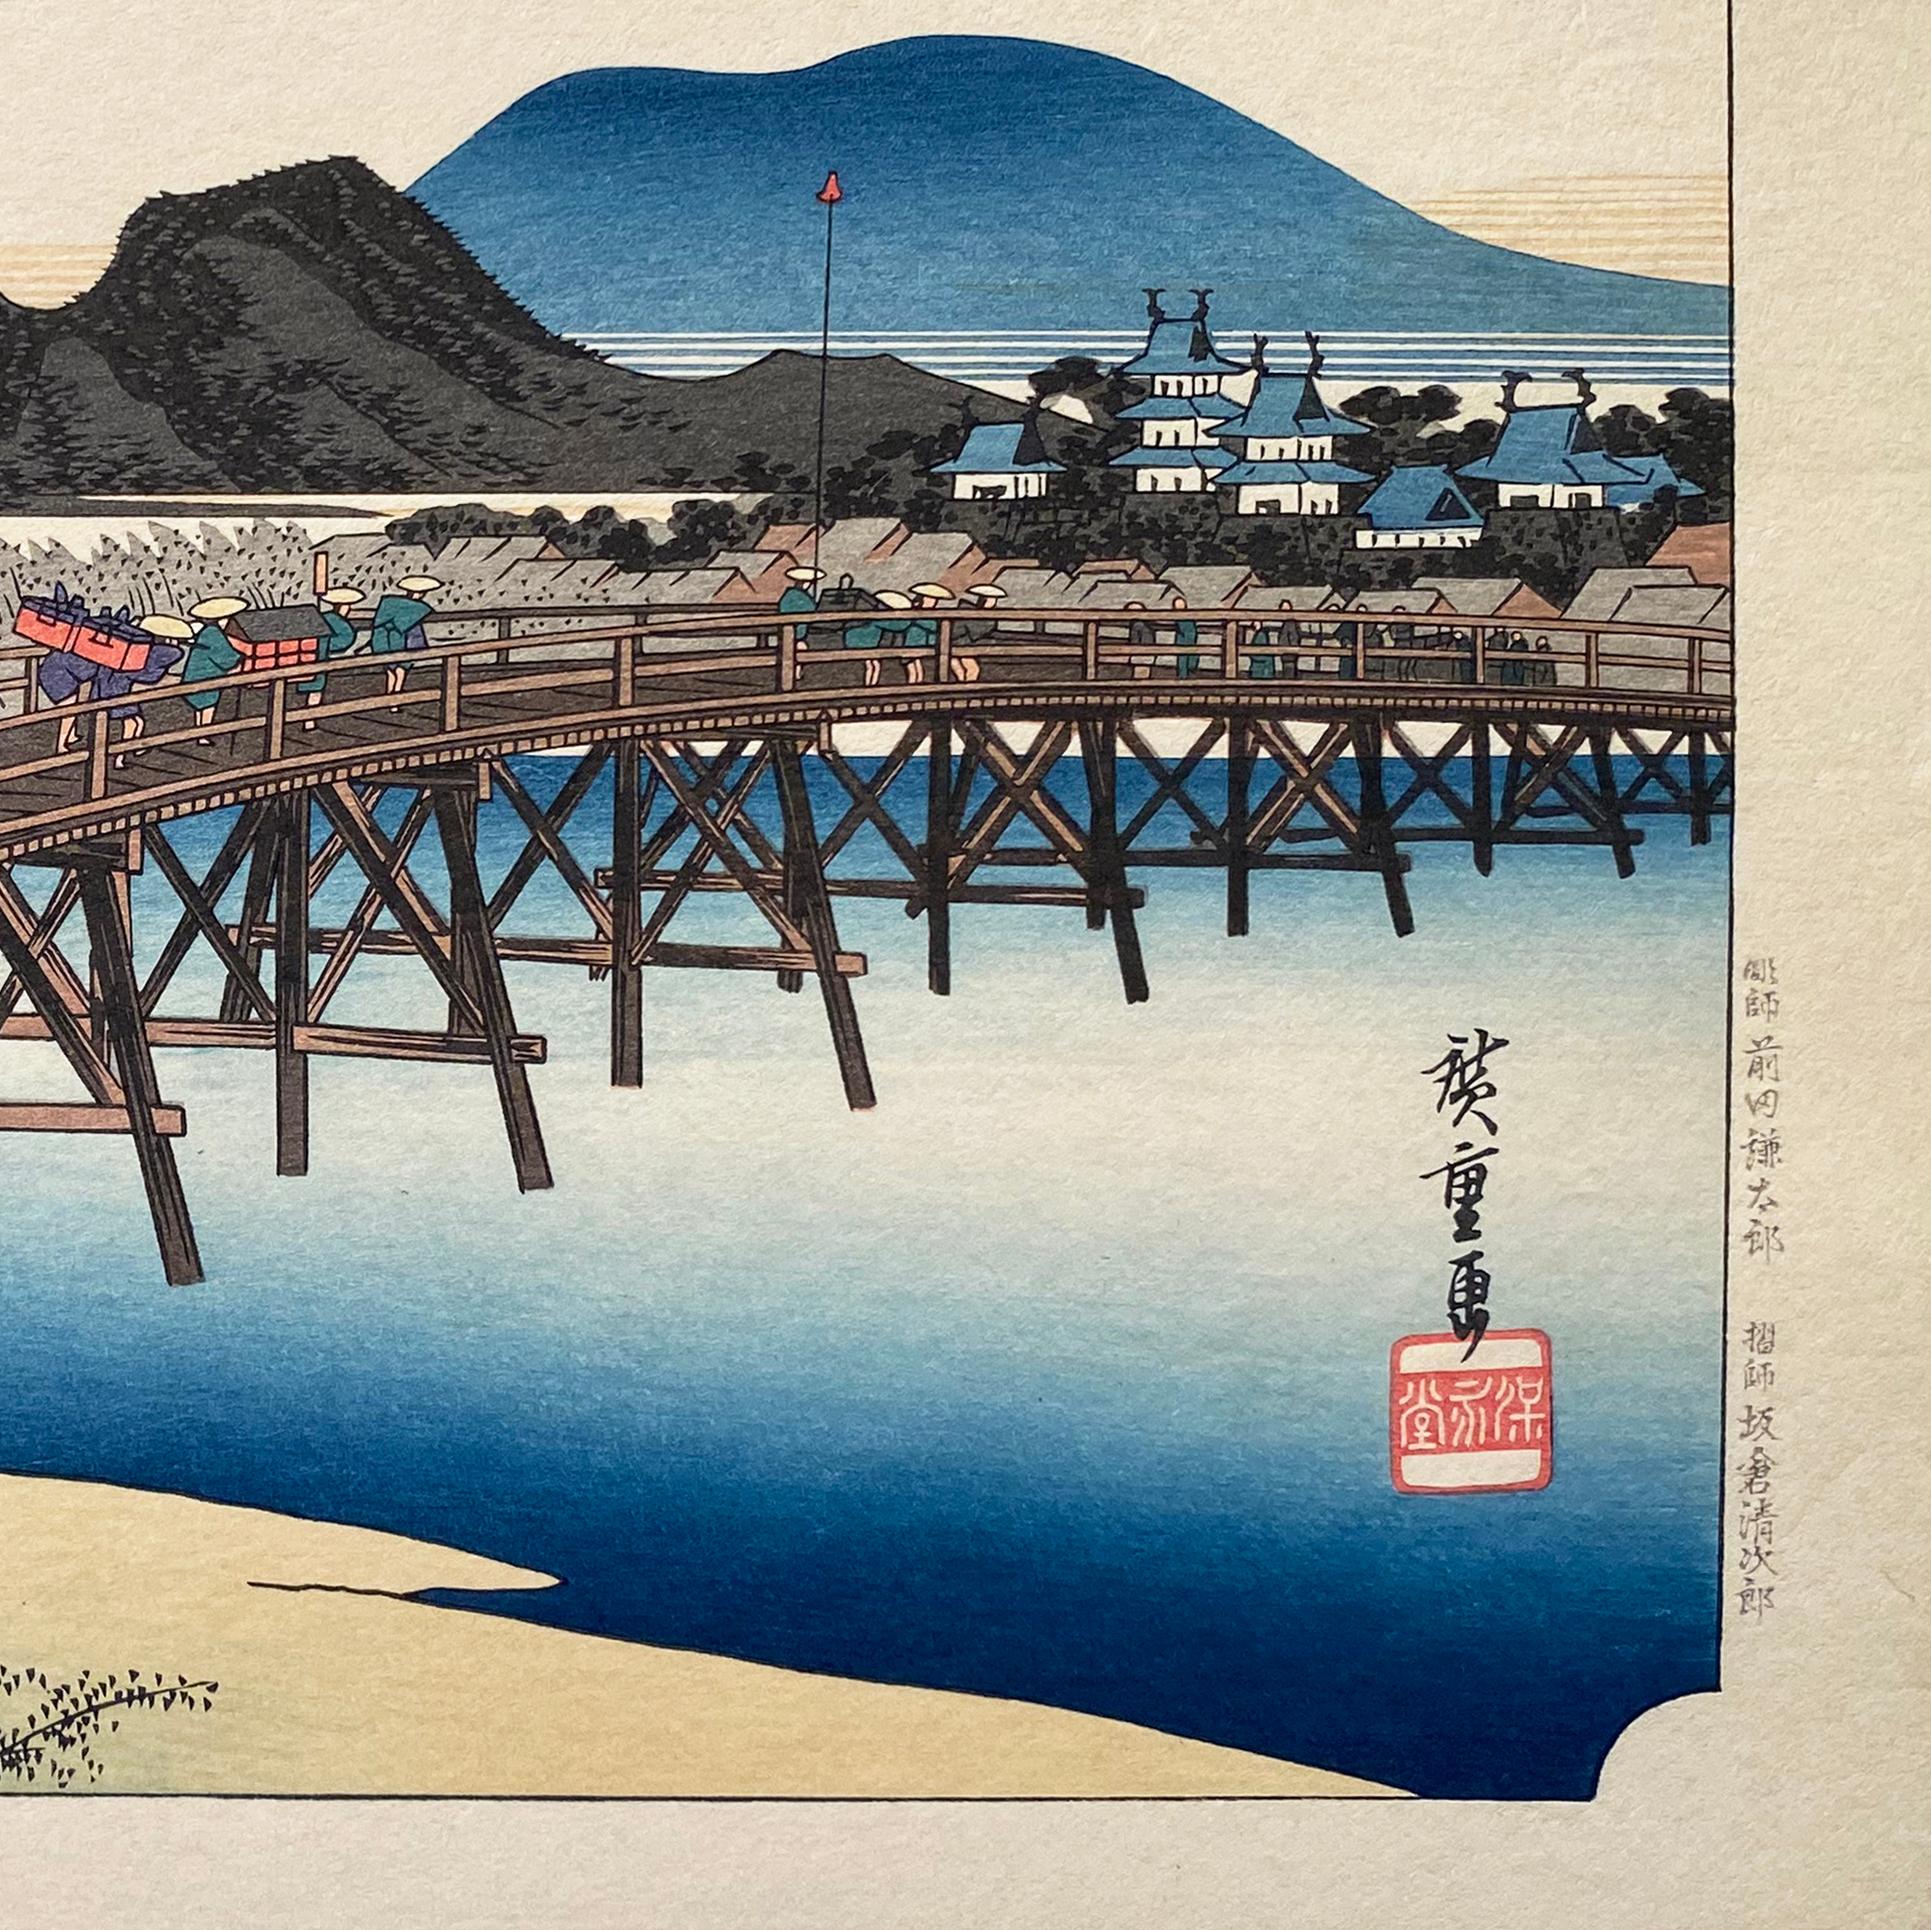 'View of Okazaki', After Utagawa Hiroshige 歌川廣重, Ukiyo-e Woodblock, Tokaido - Print by Utagawa Hiroshige (Ando Hiroshige)